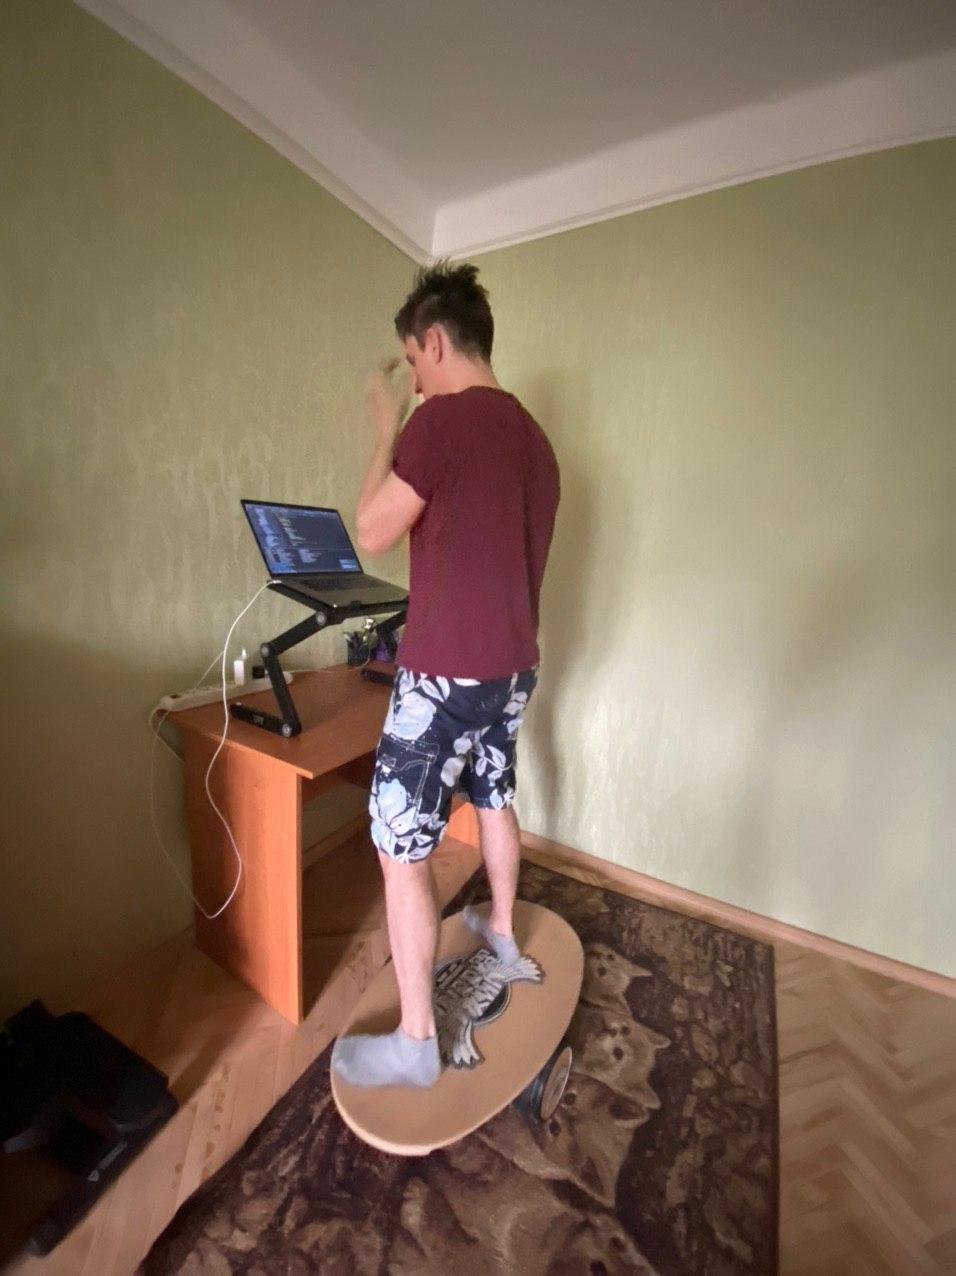 Work–life balance without a chair. Yurii Kovalenko, Senior Web Developer, Kiev